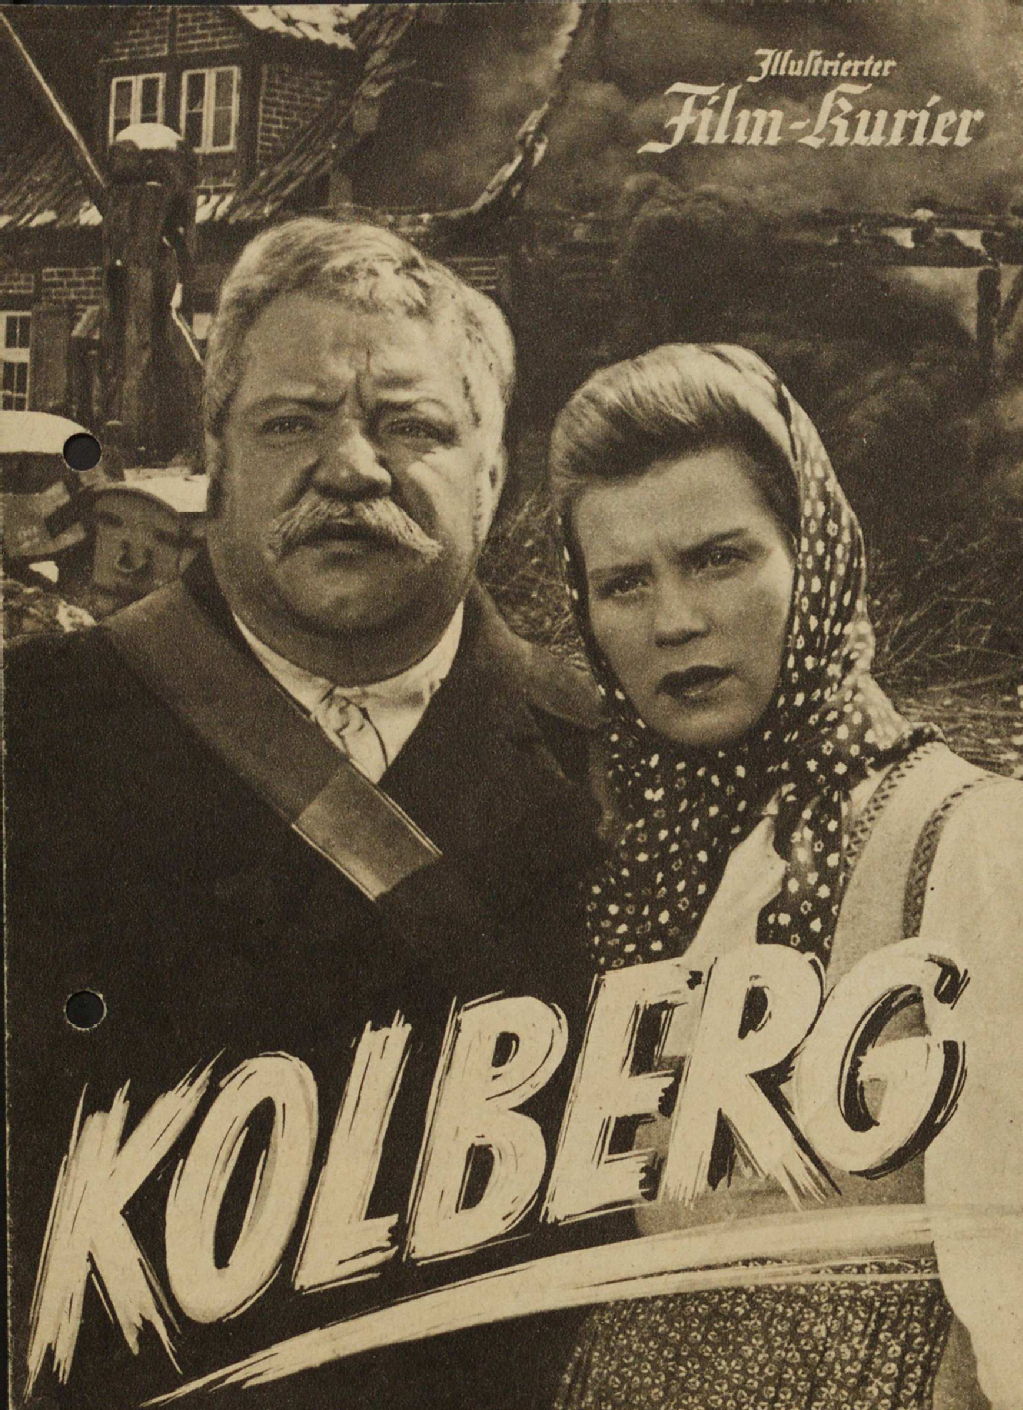 Kolberg